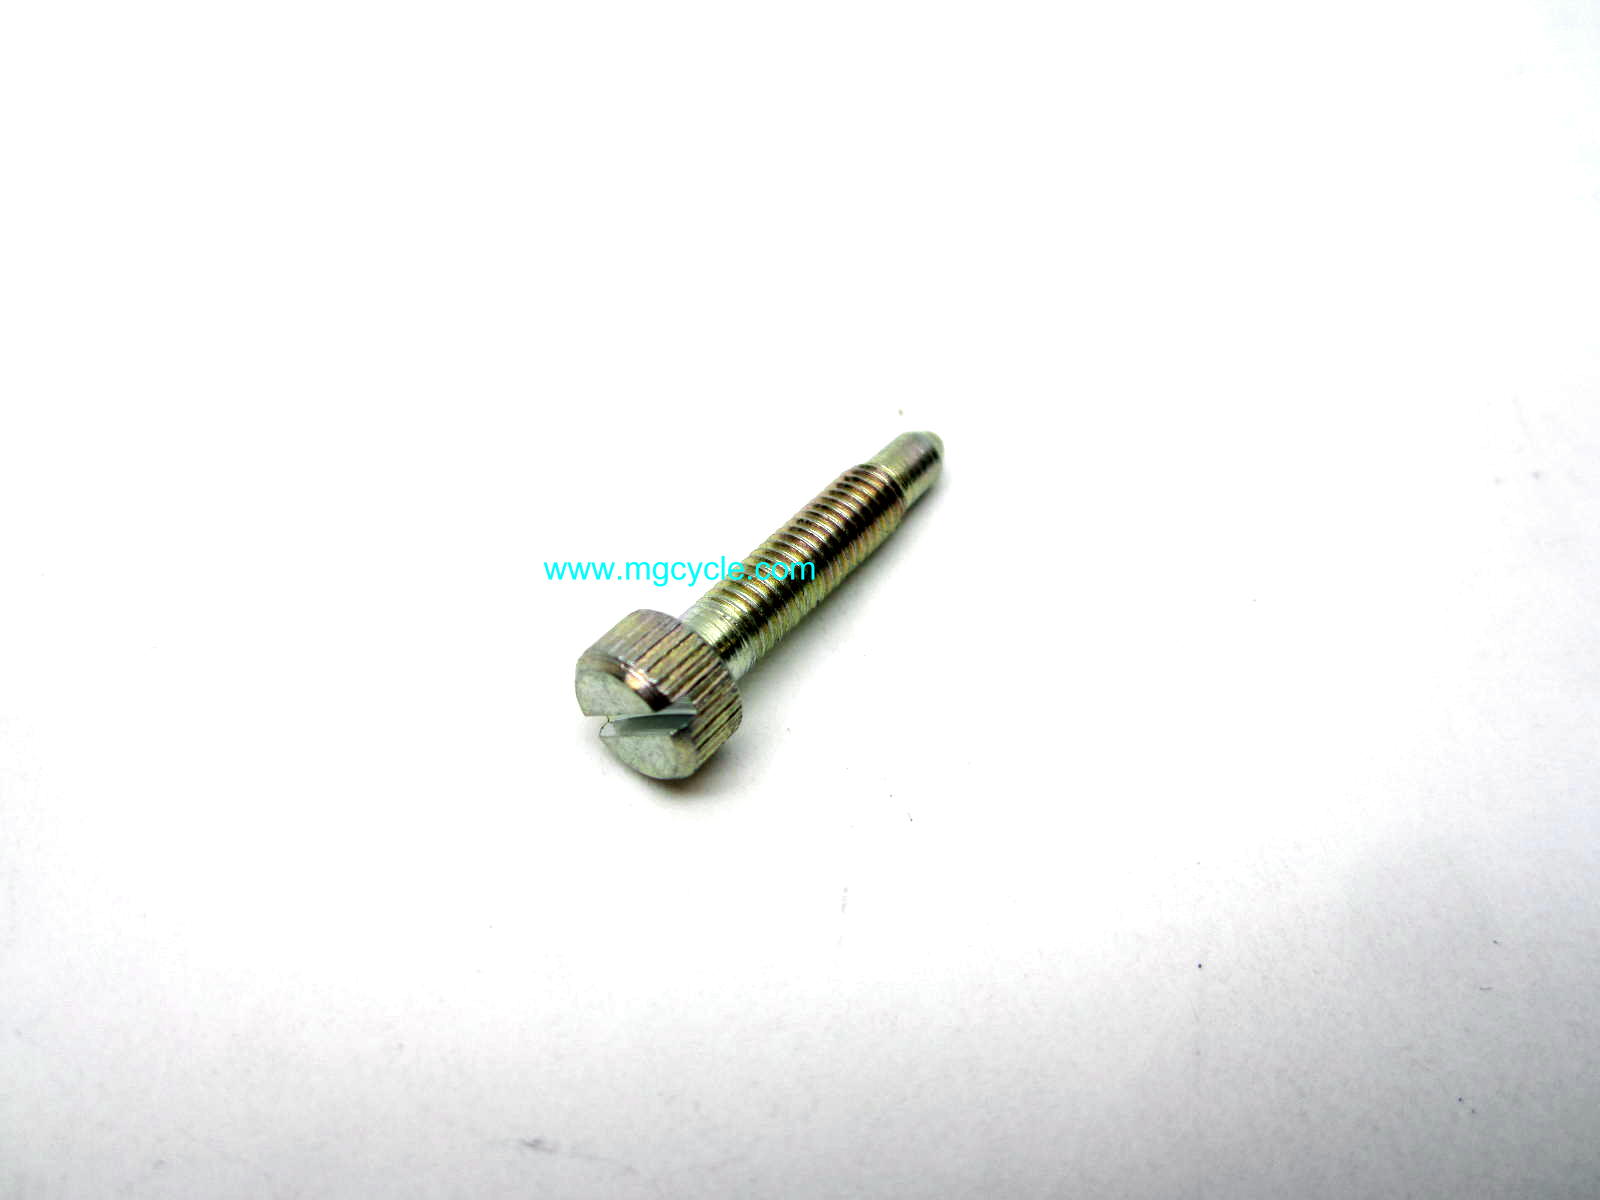 Dellorto 7673 idle adjusting screw, VHB PHF PHF PHBH, slide stop